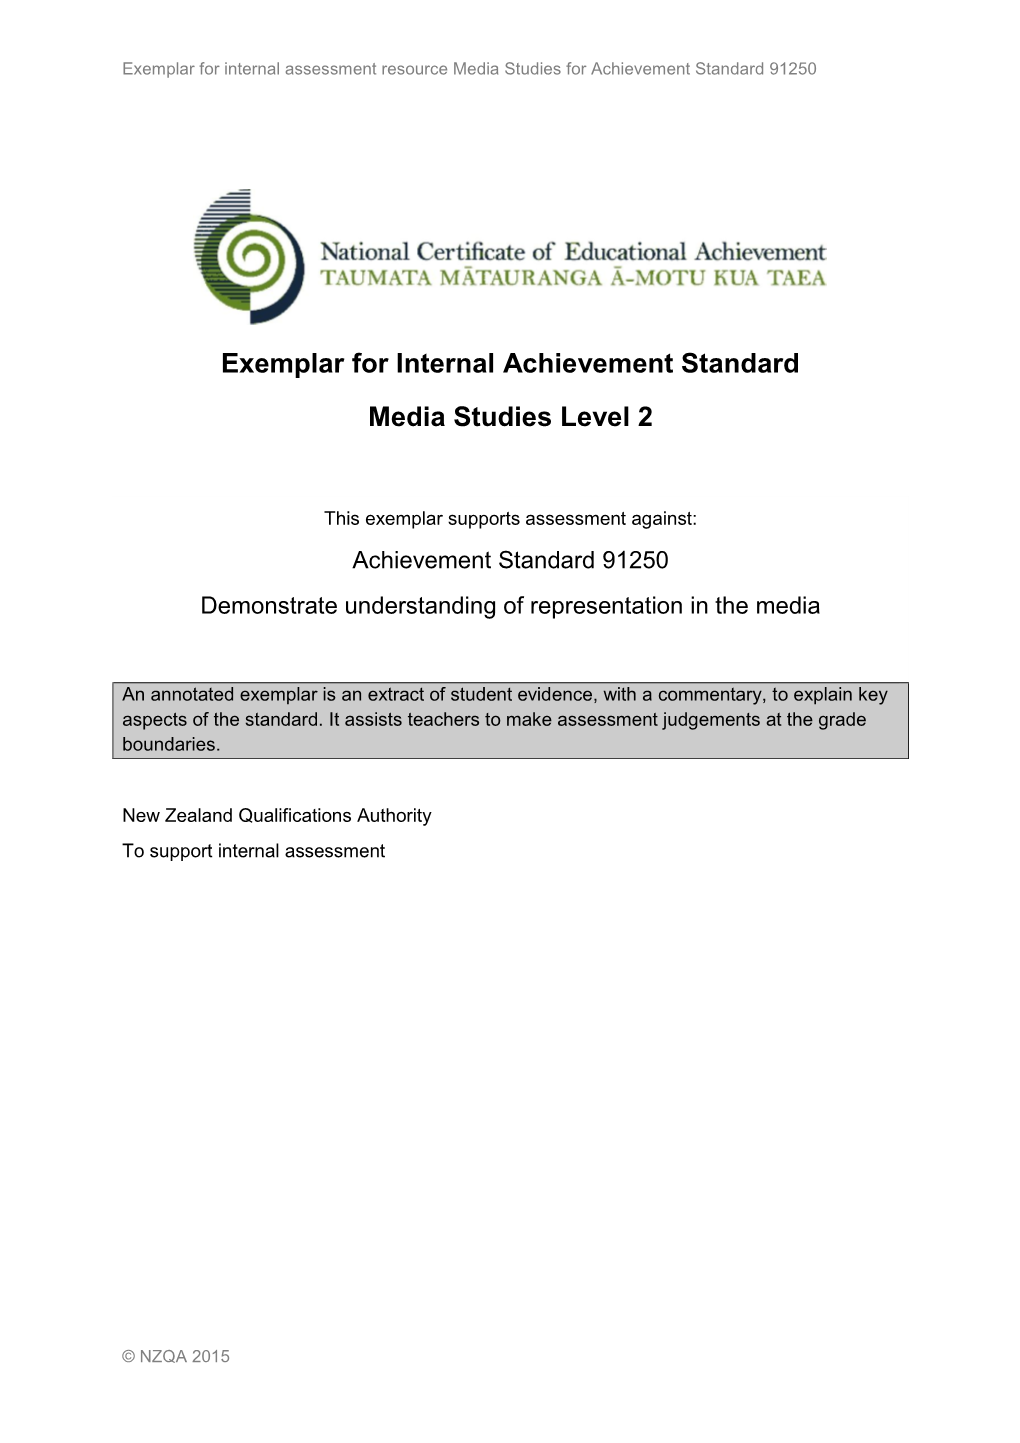 Exemplar for Internal Achievement Standard Media Studies Level 2